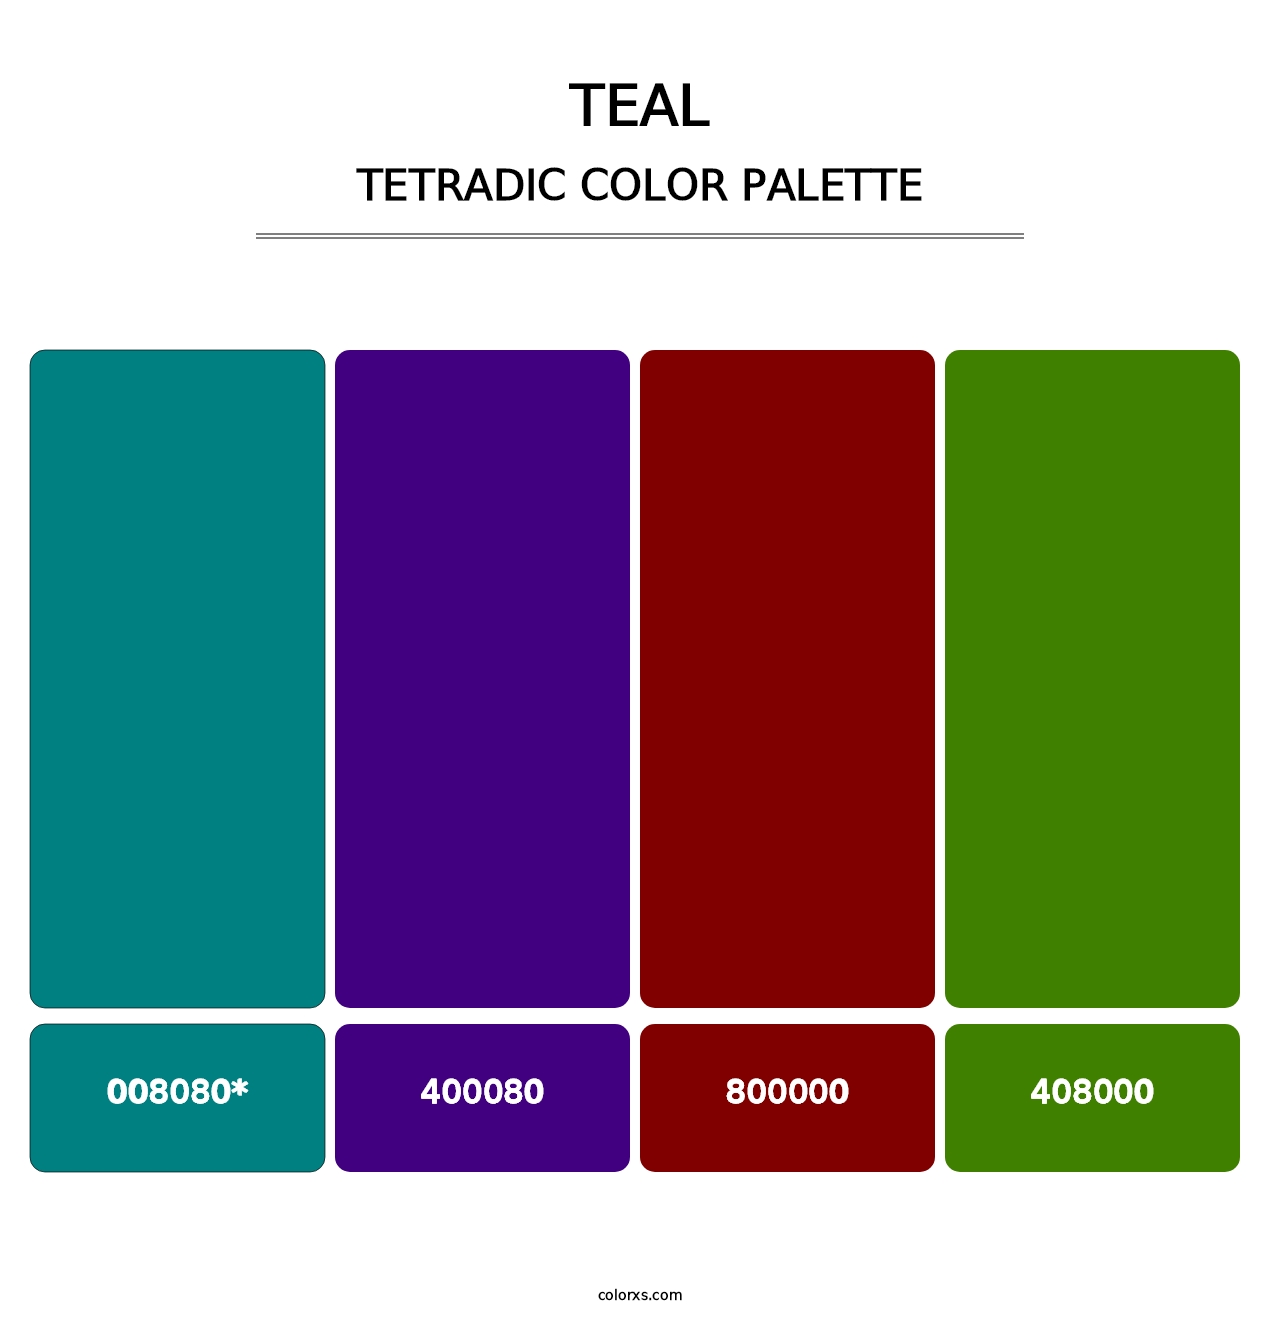 Teal - Tetradic Color Palette